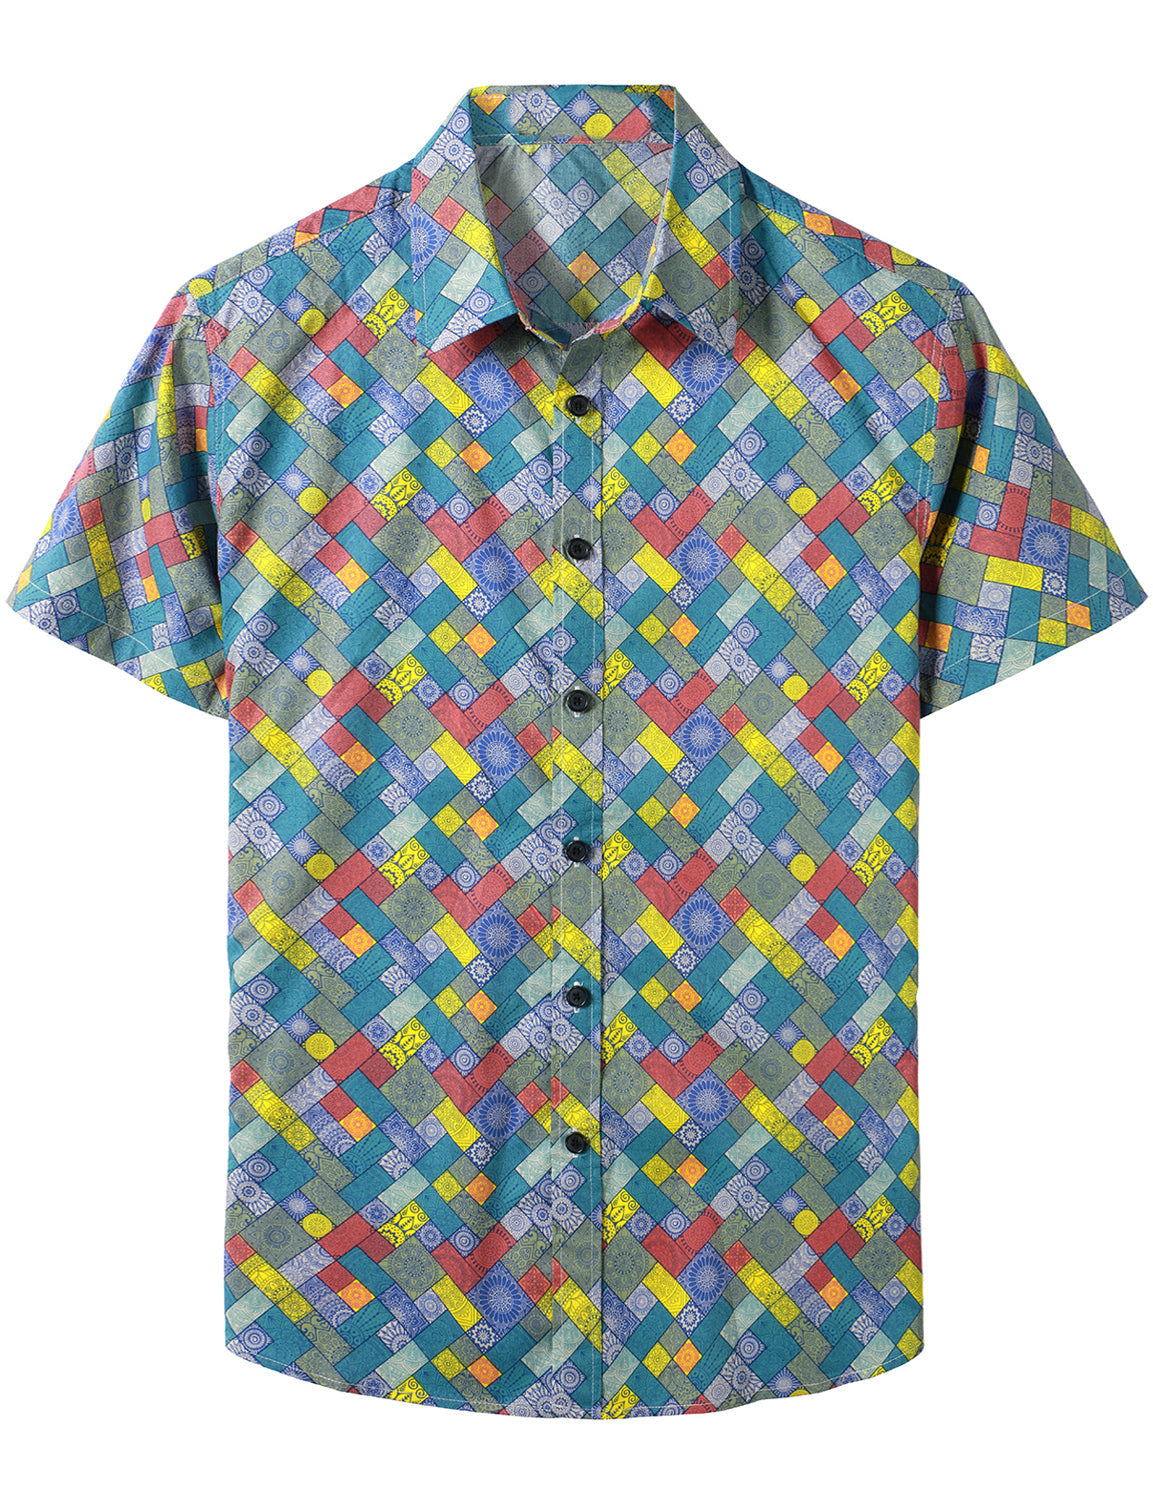 Men's Casual Tribal Print Retro Cotton Summer Button Up Short Sleeve Shirt